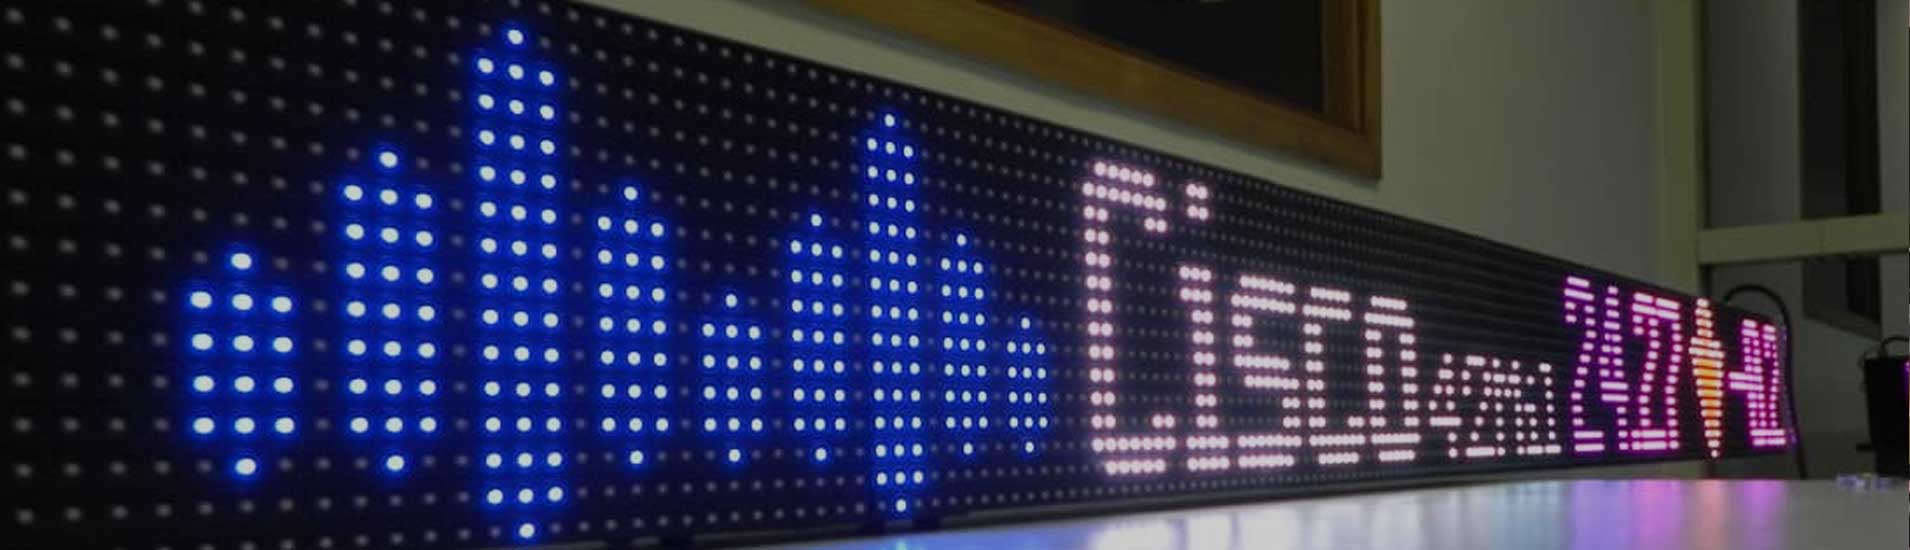 LED Stock Ticker Display Background Image